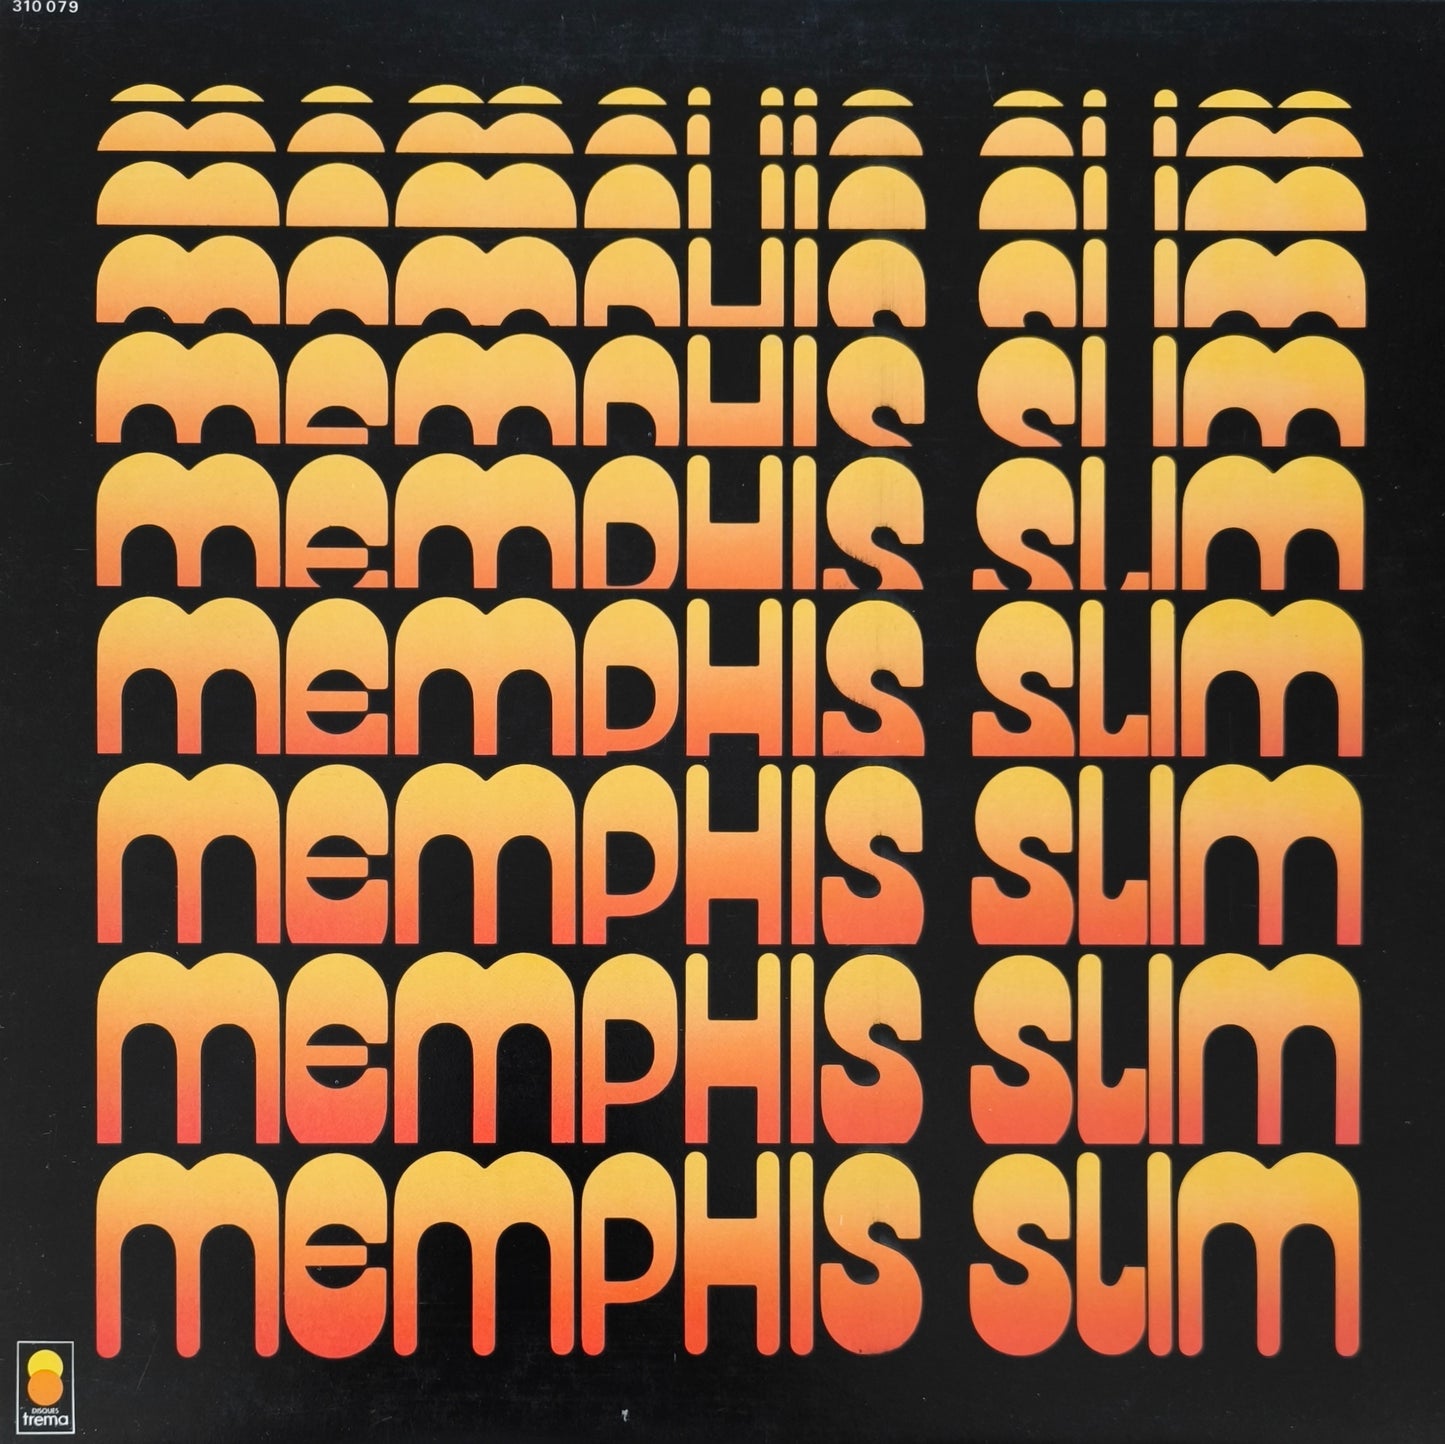 MEMPHIS SLIM - Memphis Slim